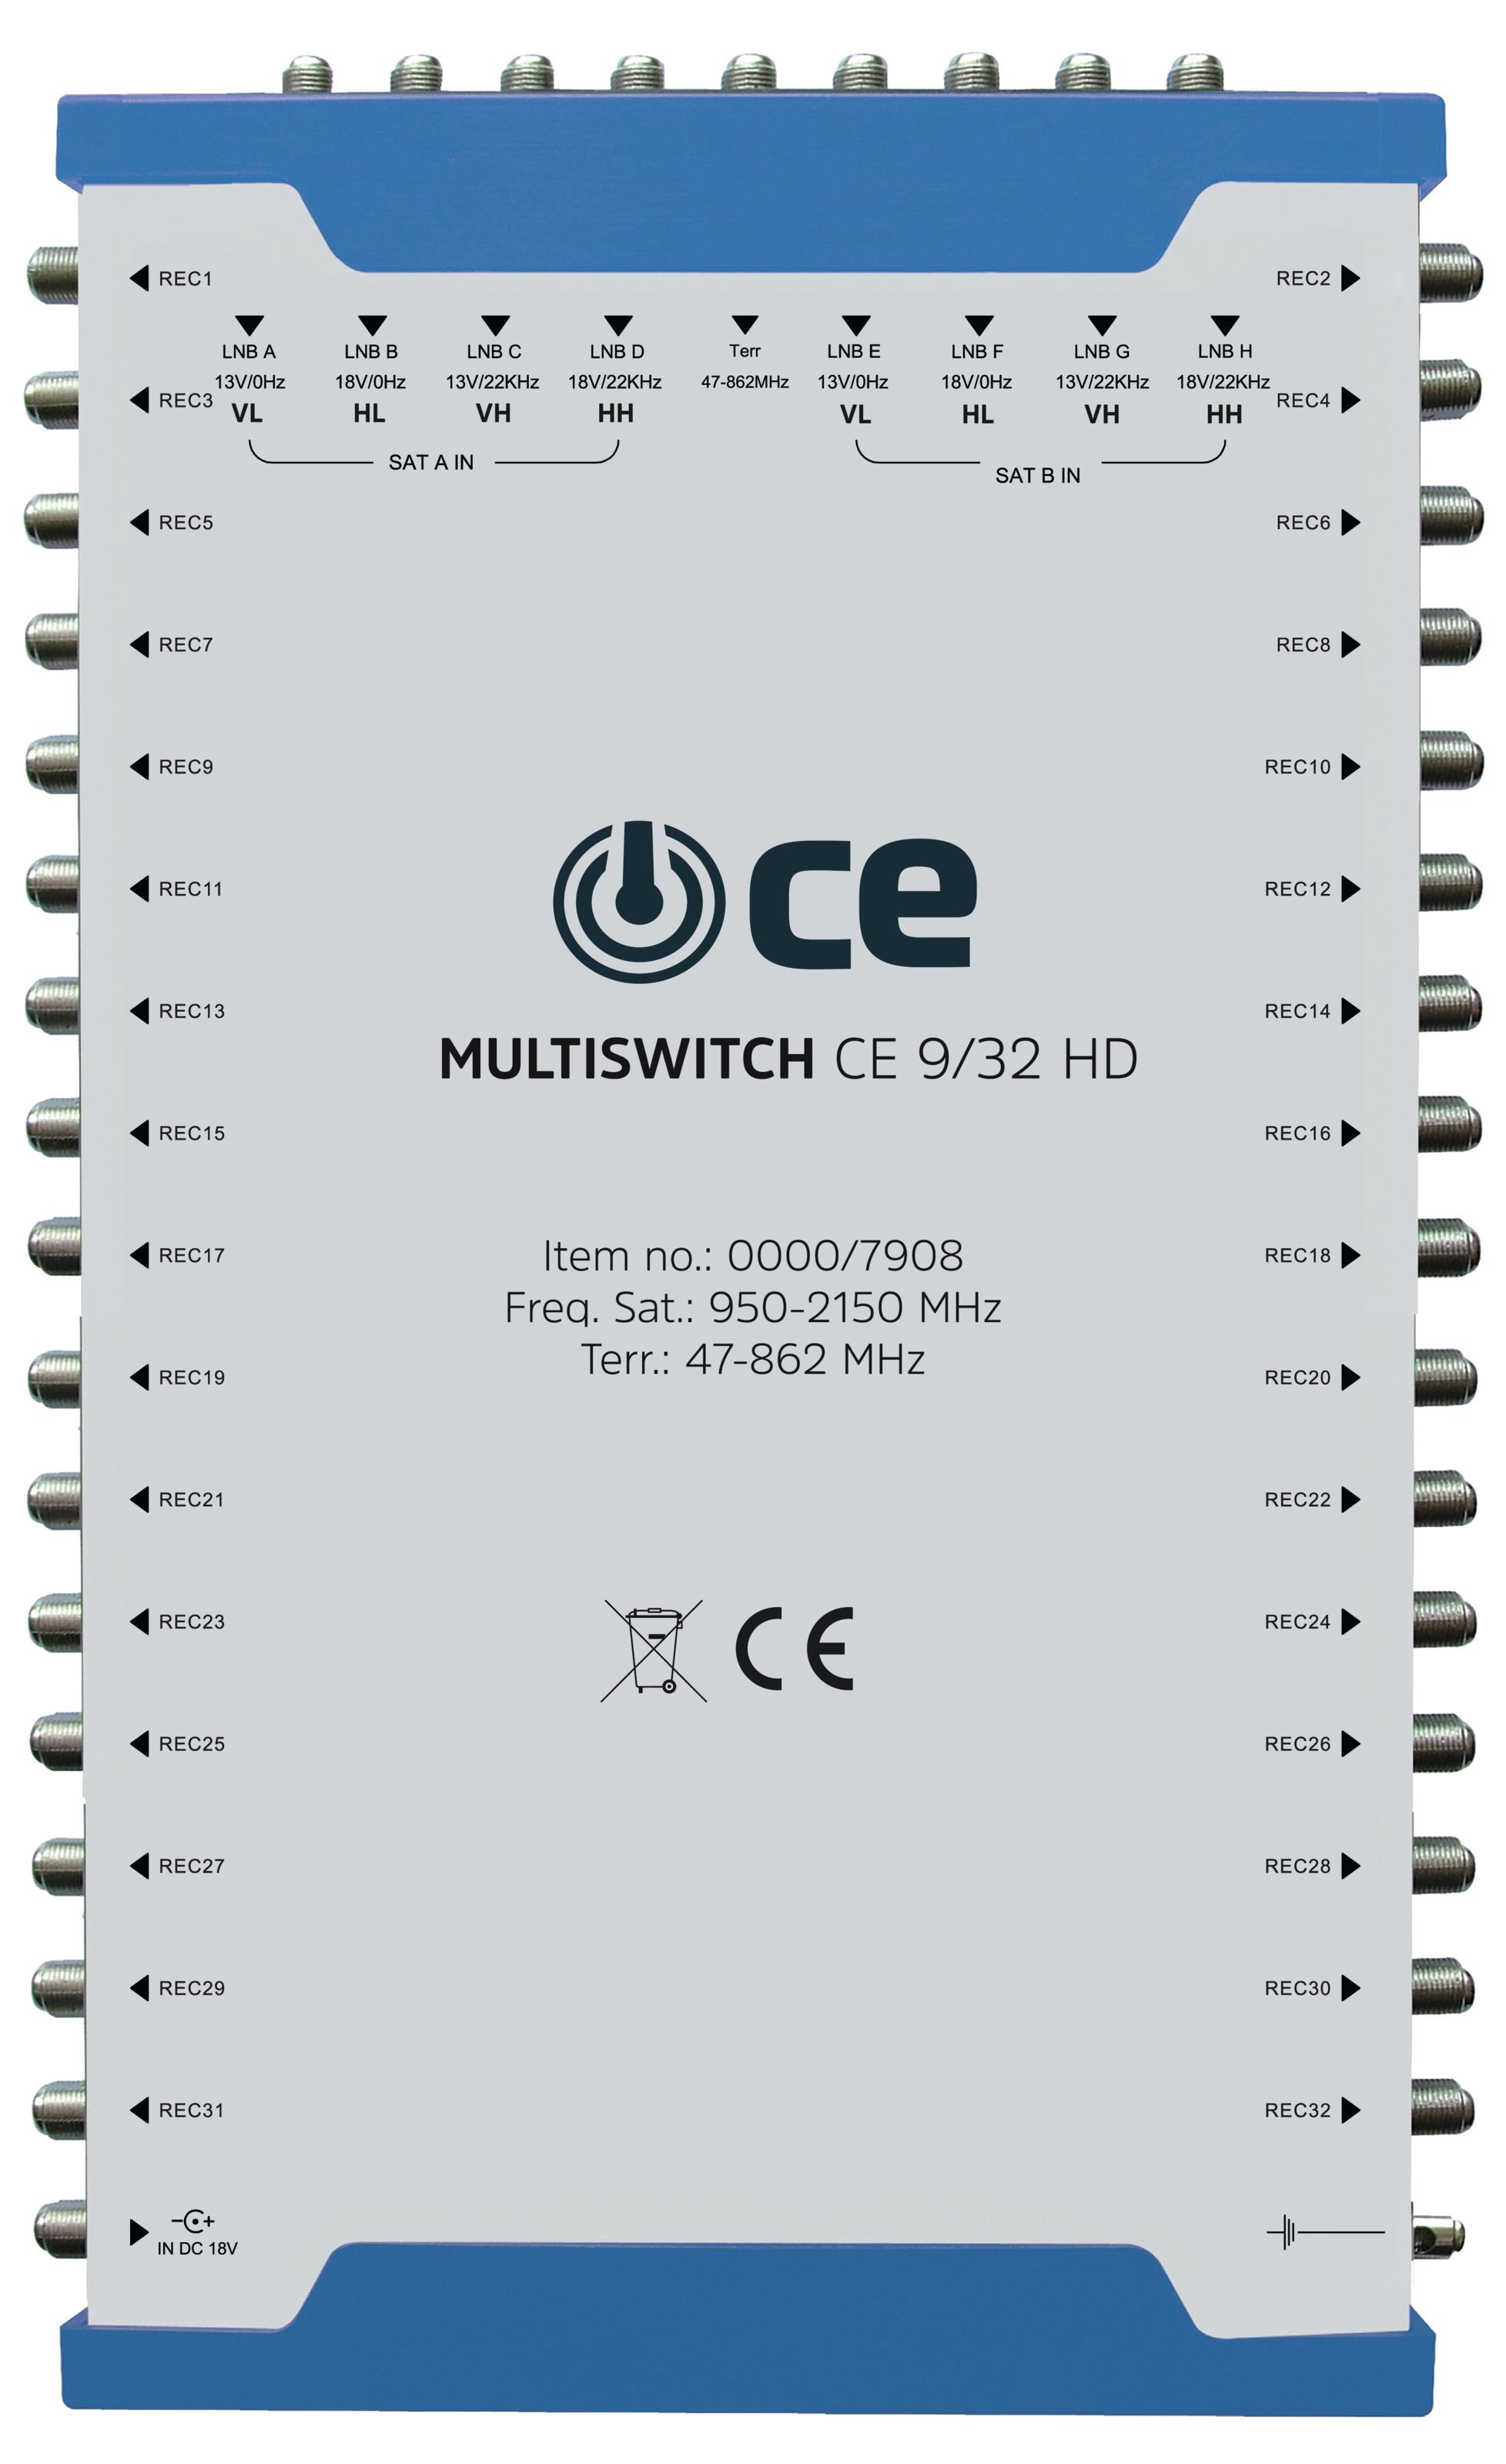 Multiswitch CE 9/32 HD